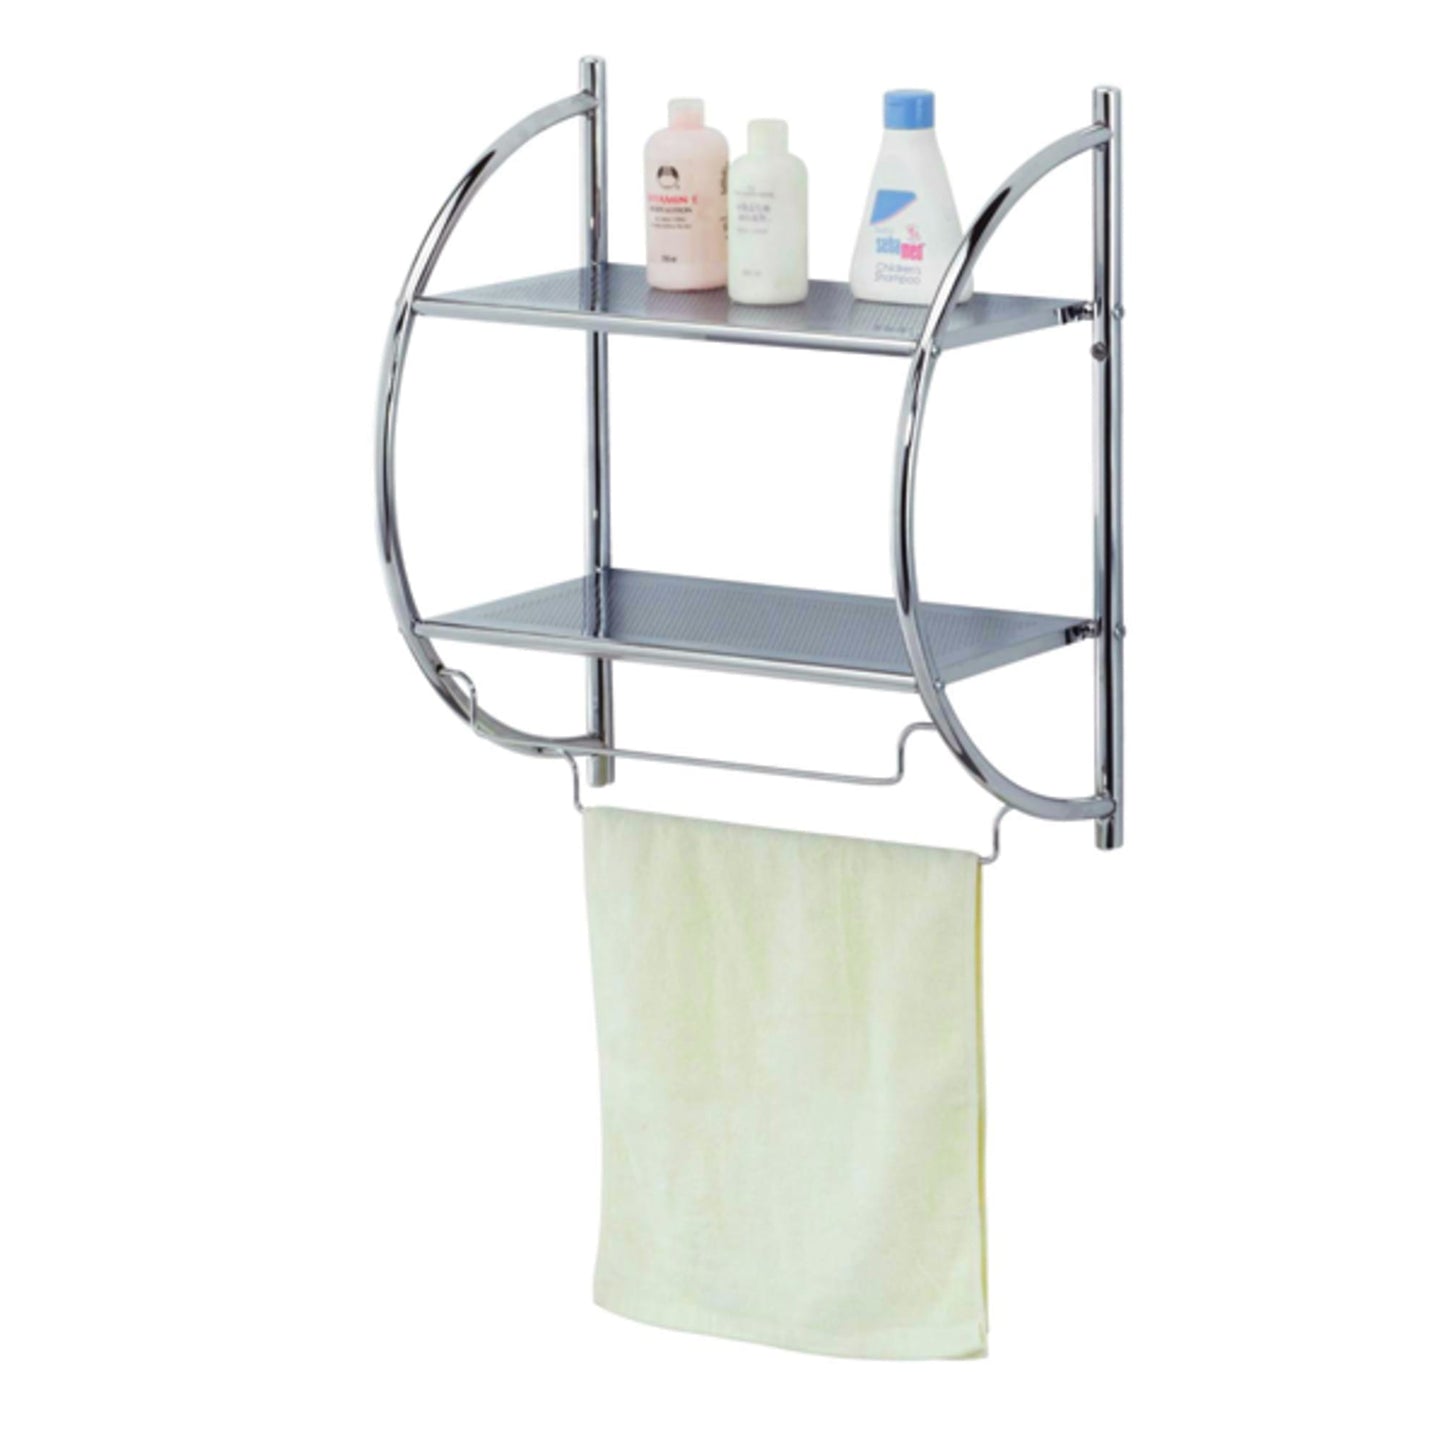 2 Tier Wall Mounting Chrome Plated Steel Bathroom Shelf with Towel Bar